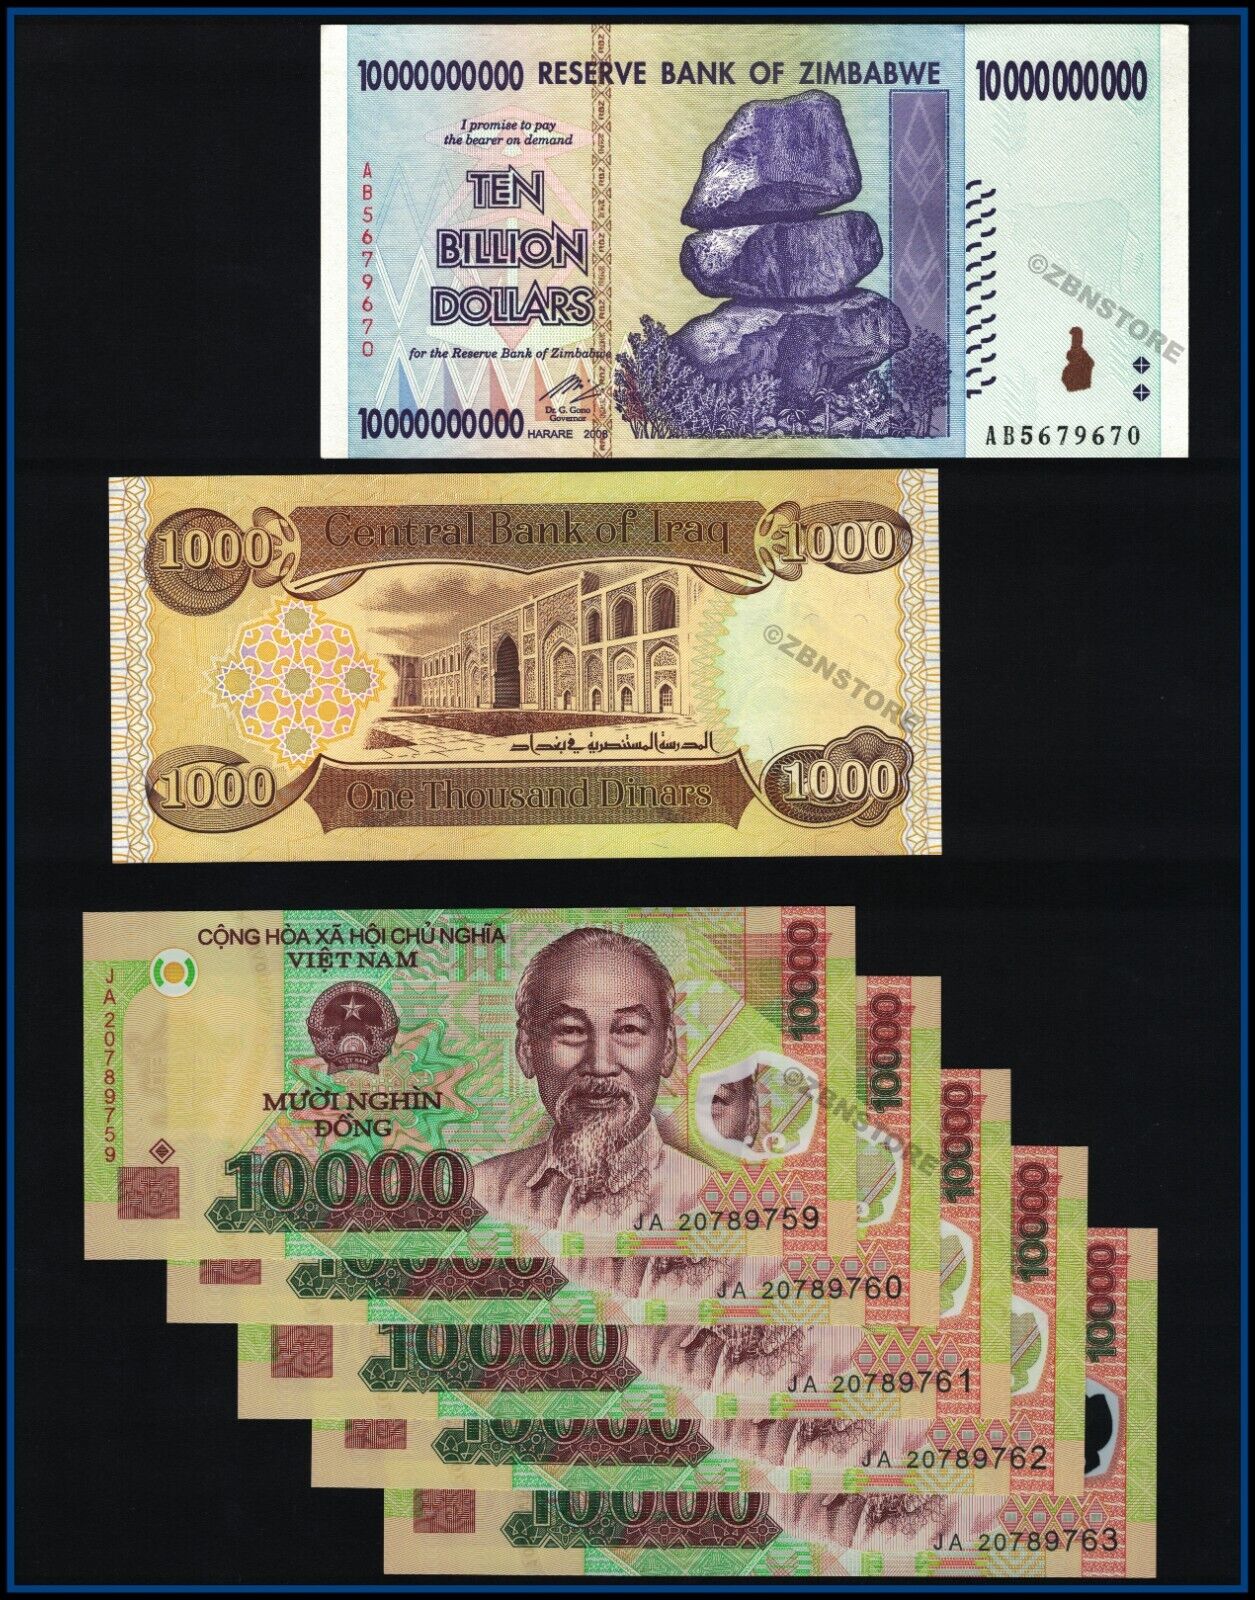 10 Billion Dollars Zimbabwe 1000 Dinars Iraq 5 x 10000 Dong Vietnam Uncirculated